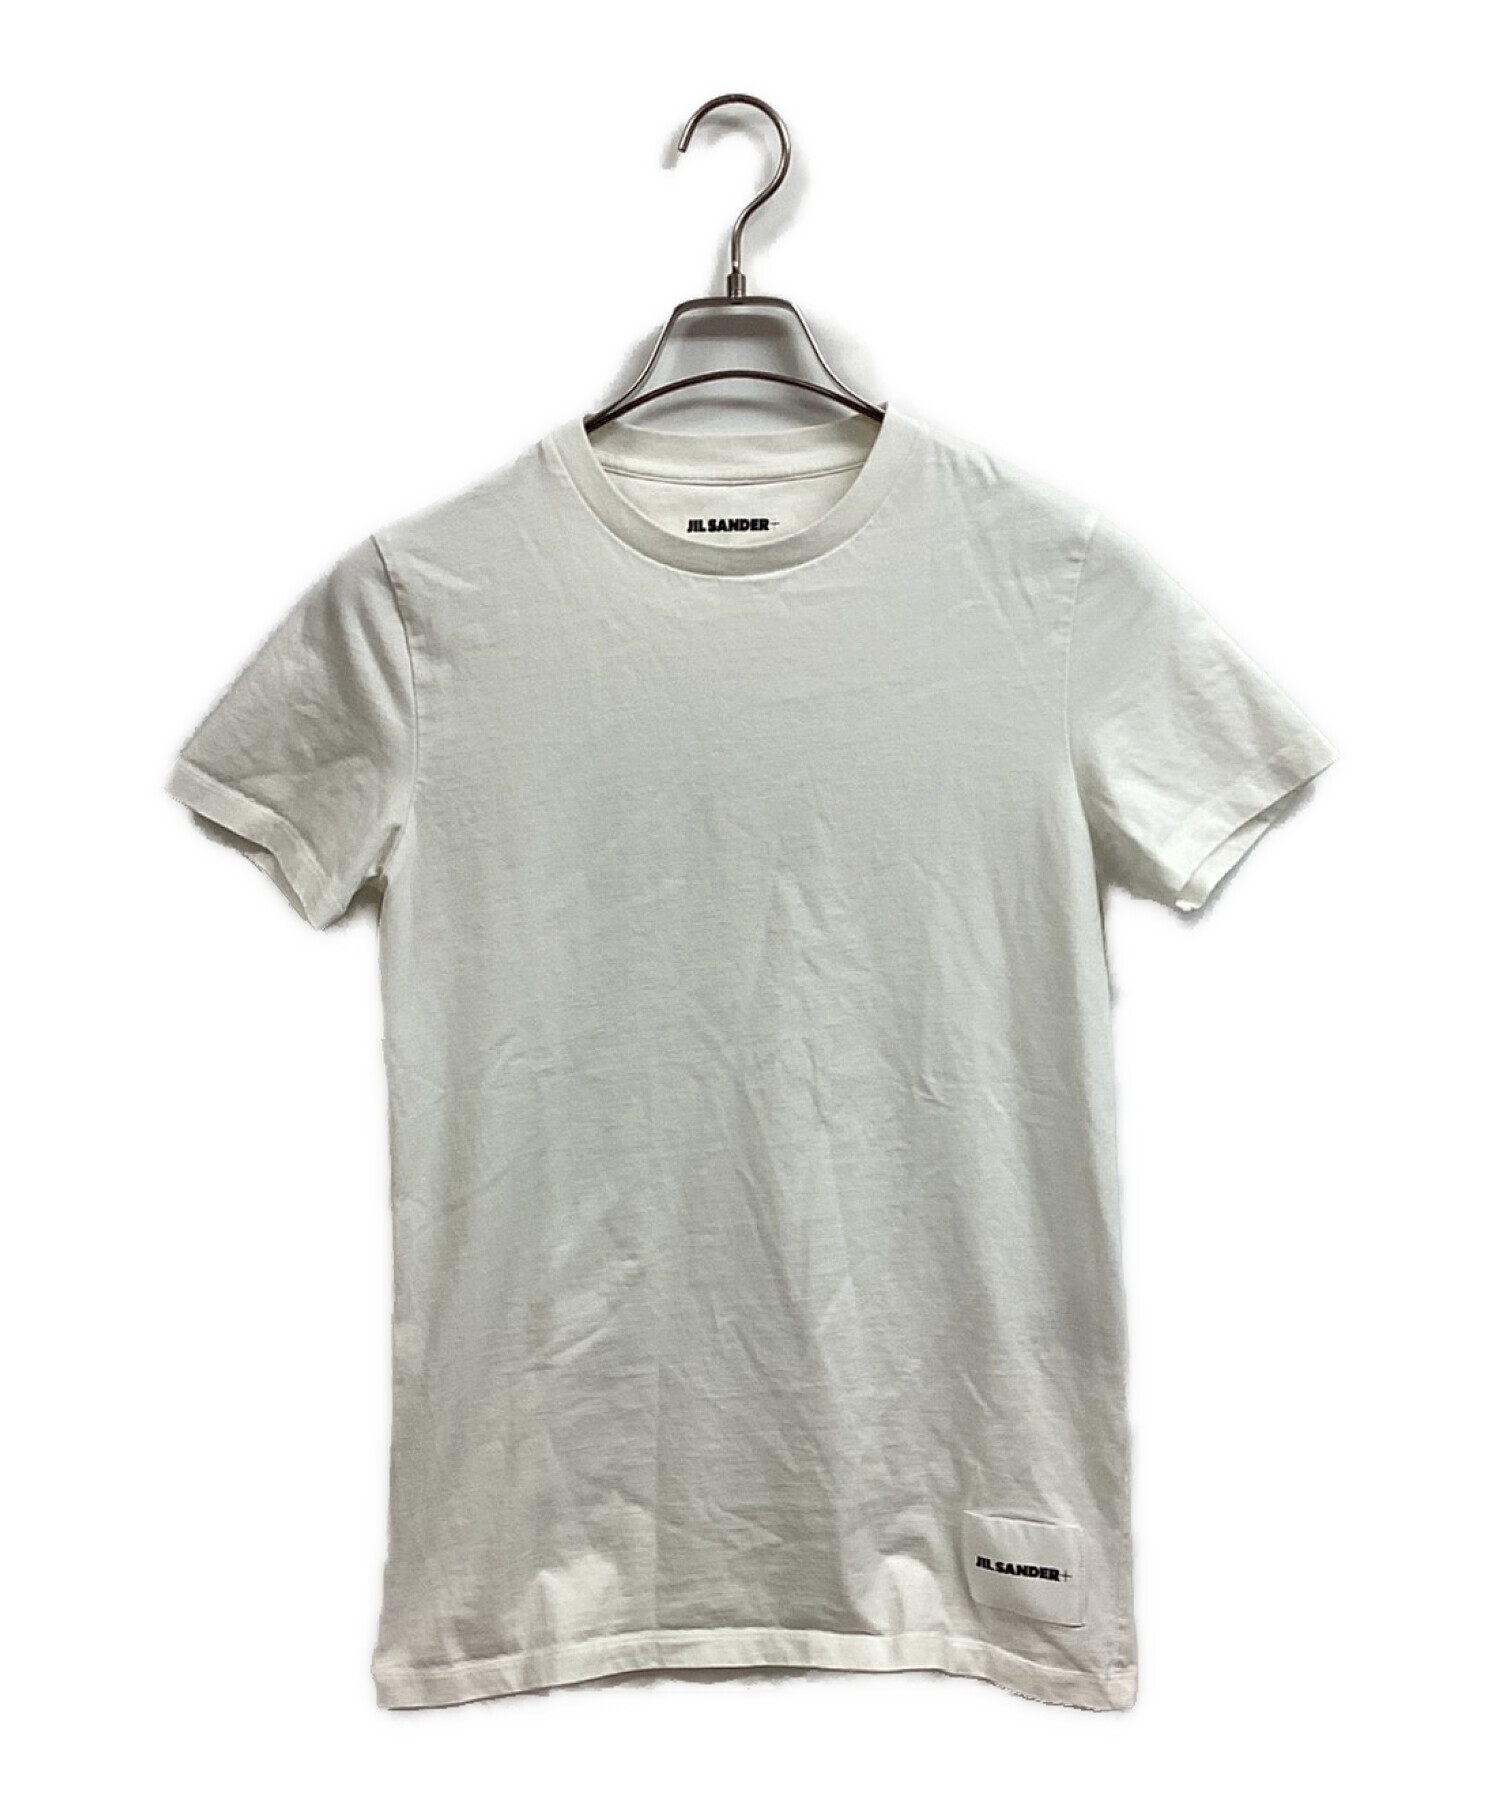 JIL SANDER+ (ジルサンダープラス) ロゴパッチパックTシャツ ホワイト サイズ:M